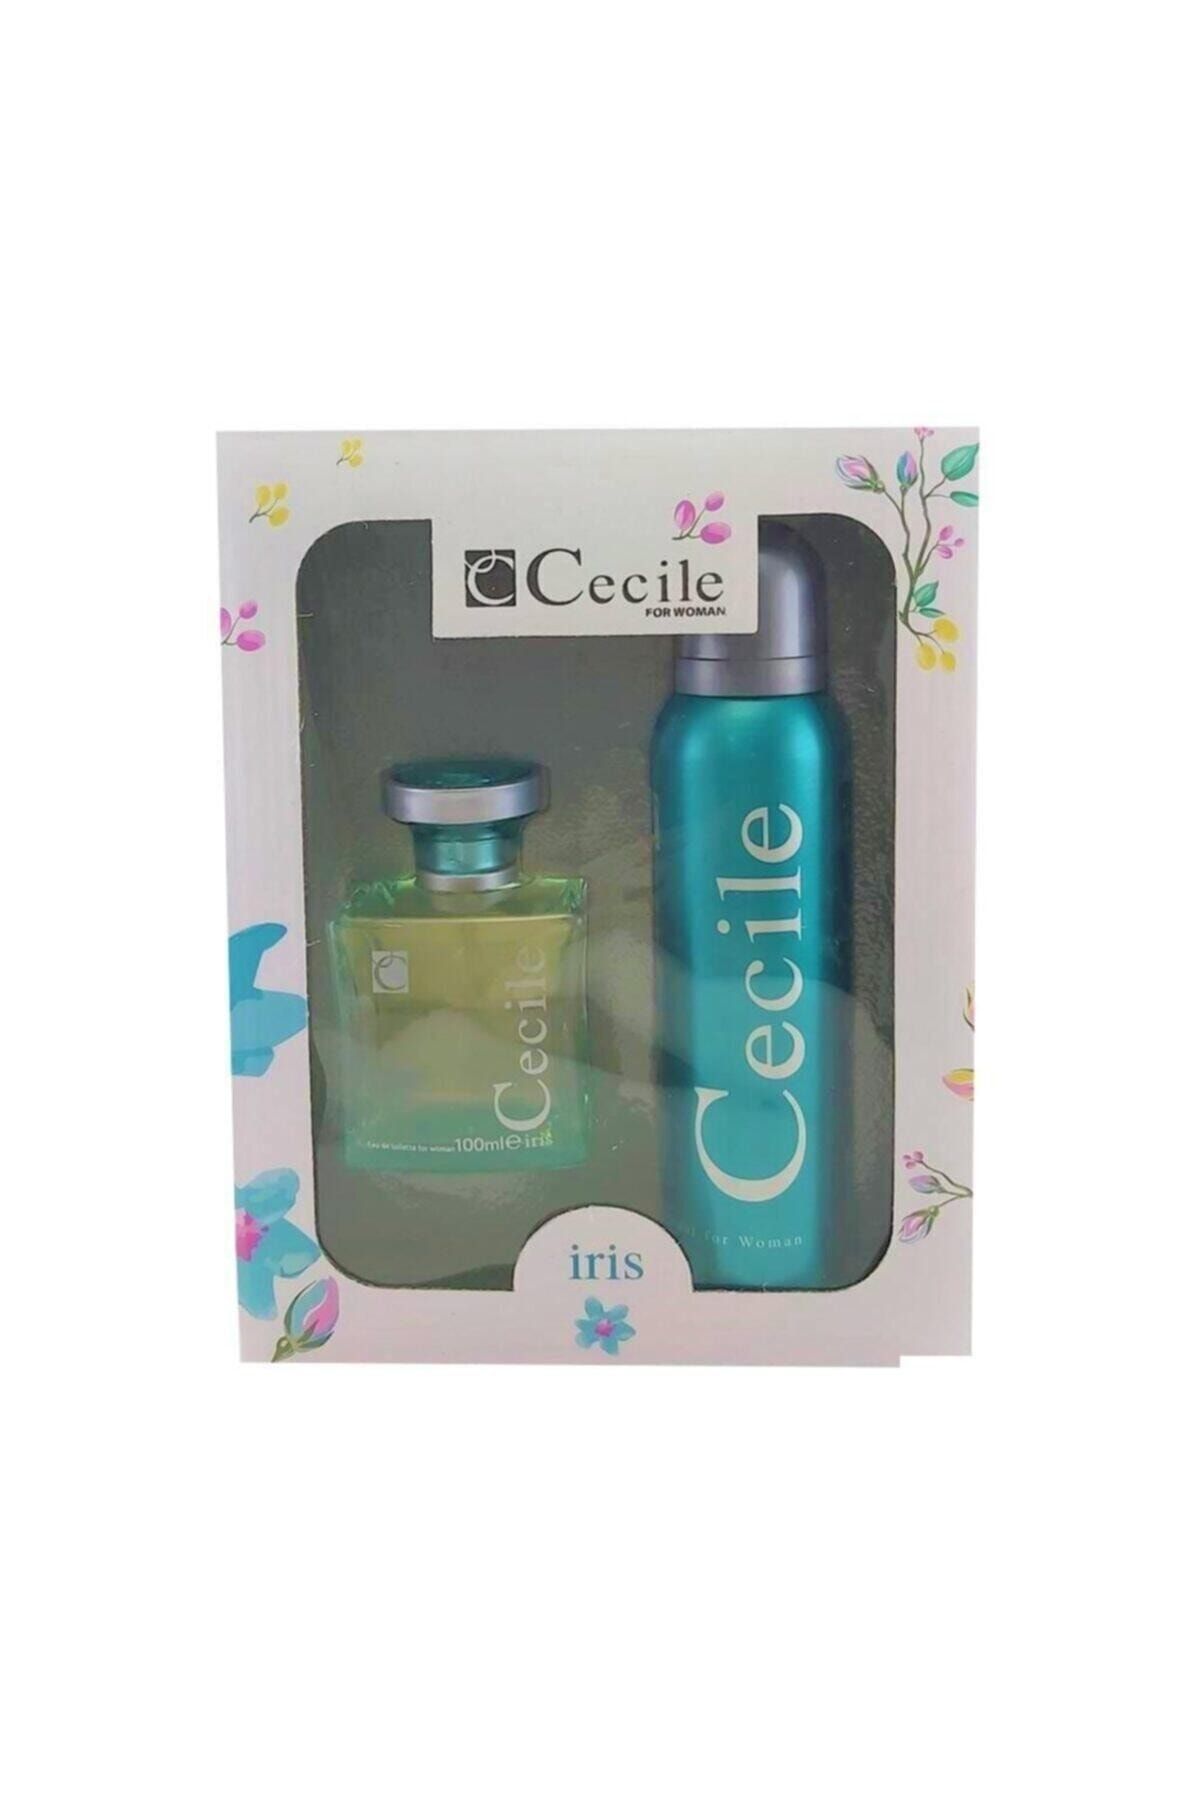 Cecile 100 ml Edt+150 ml Deo Iris Set